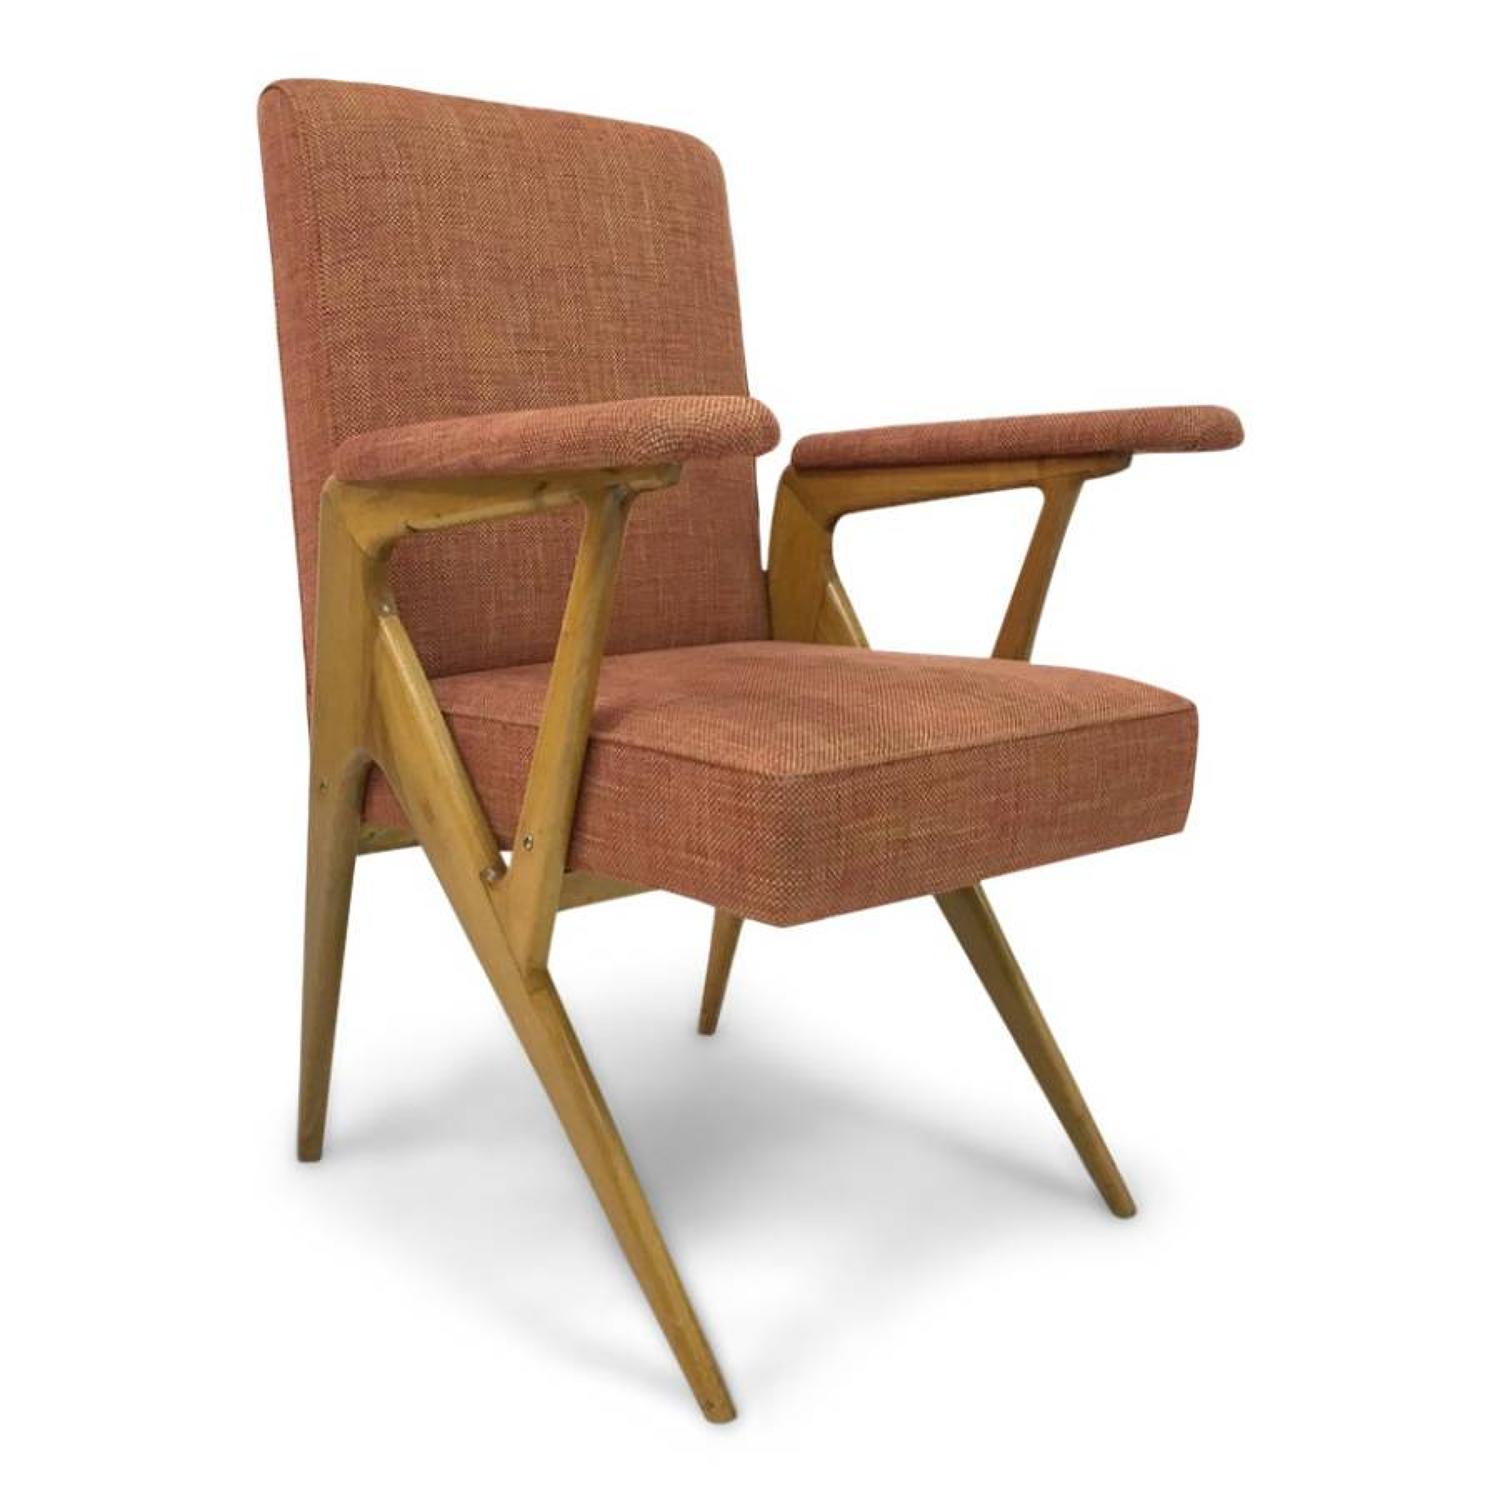 1950s geometric shaped Italian armchair